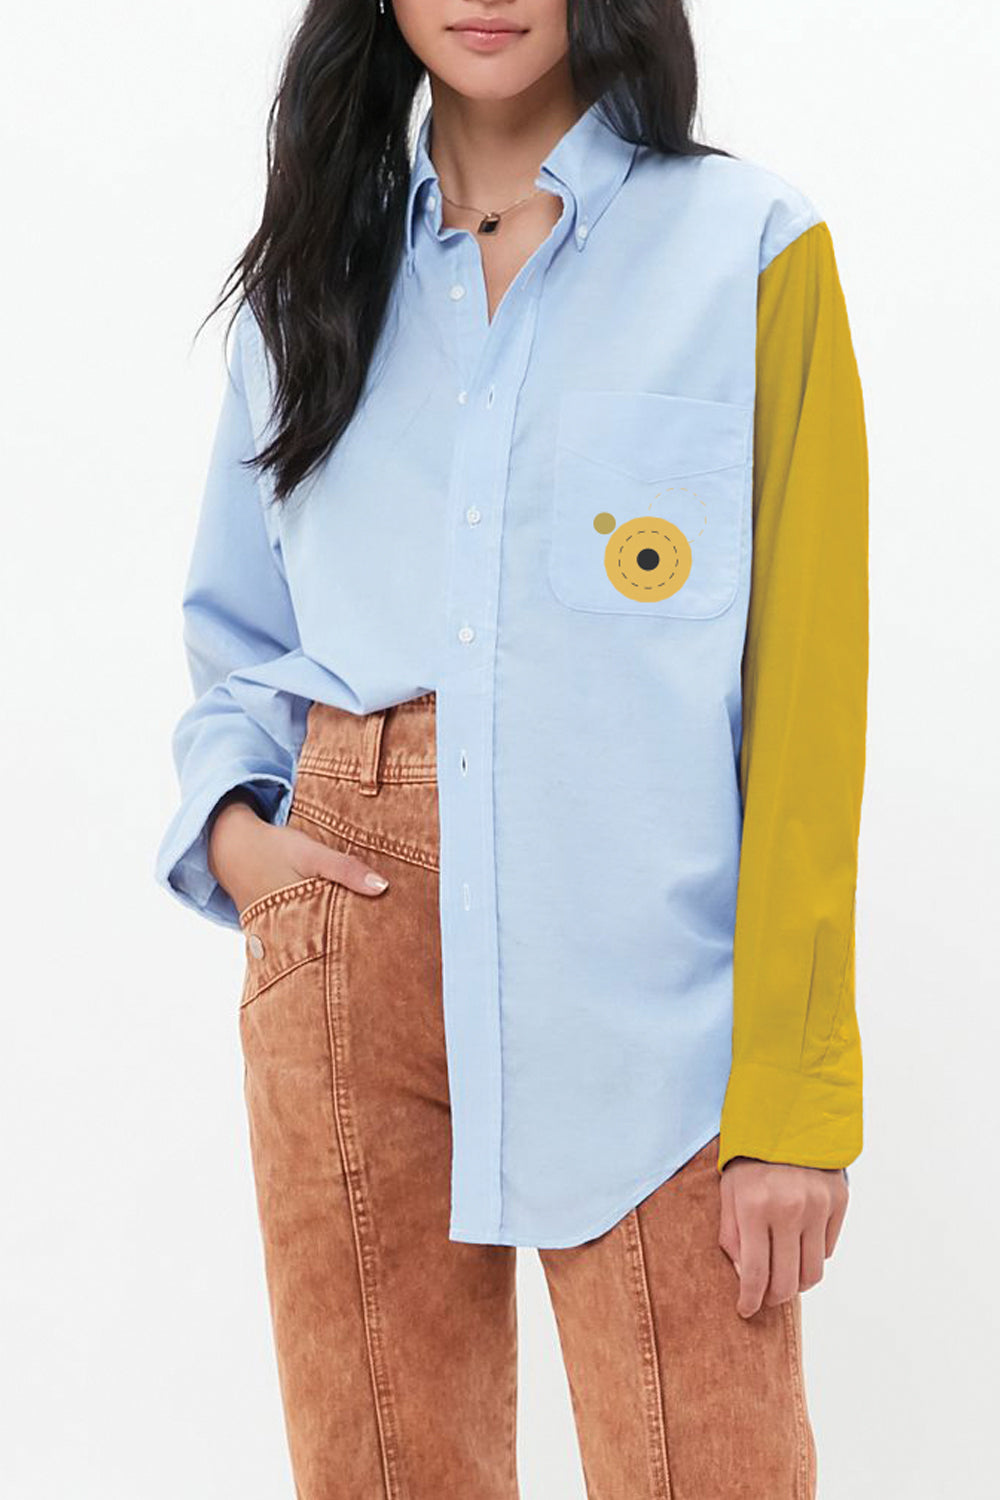 Tornstee Blue and Yellow Shirt